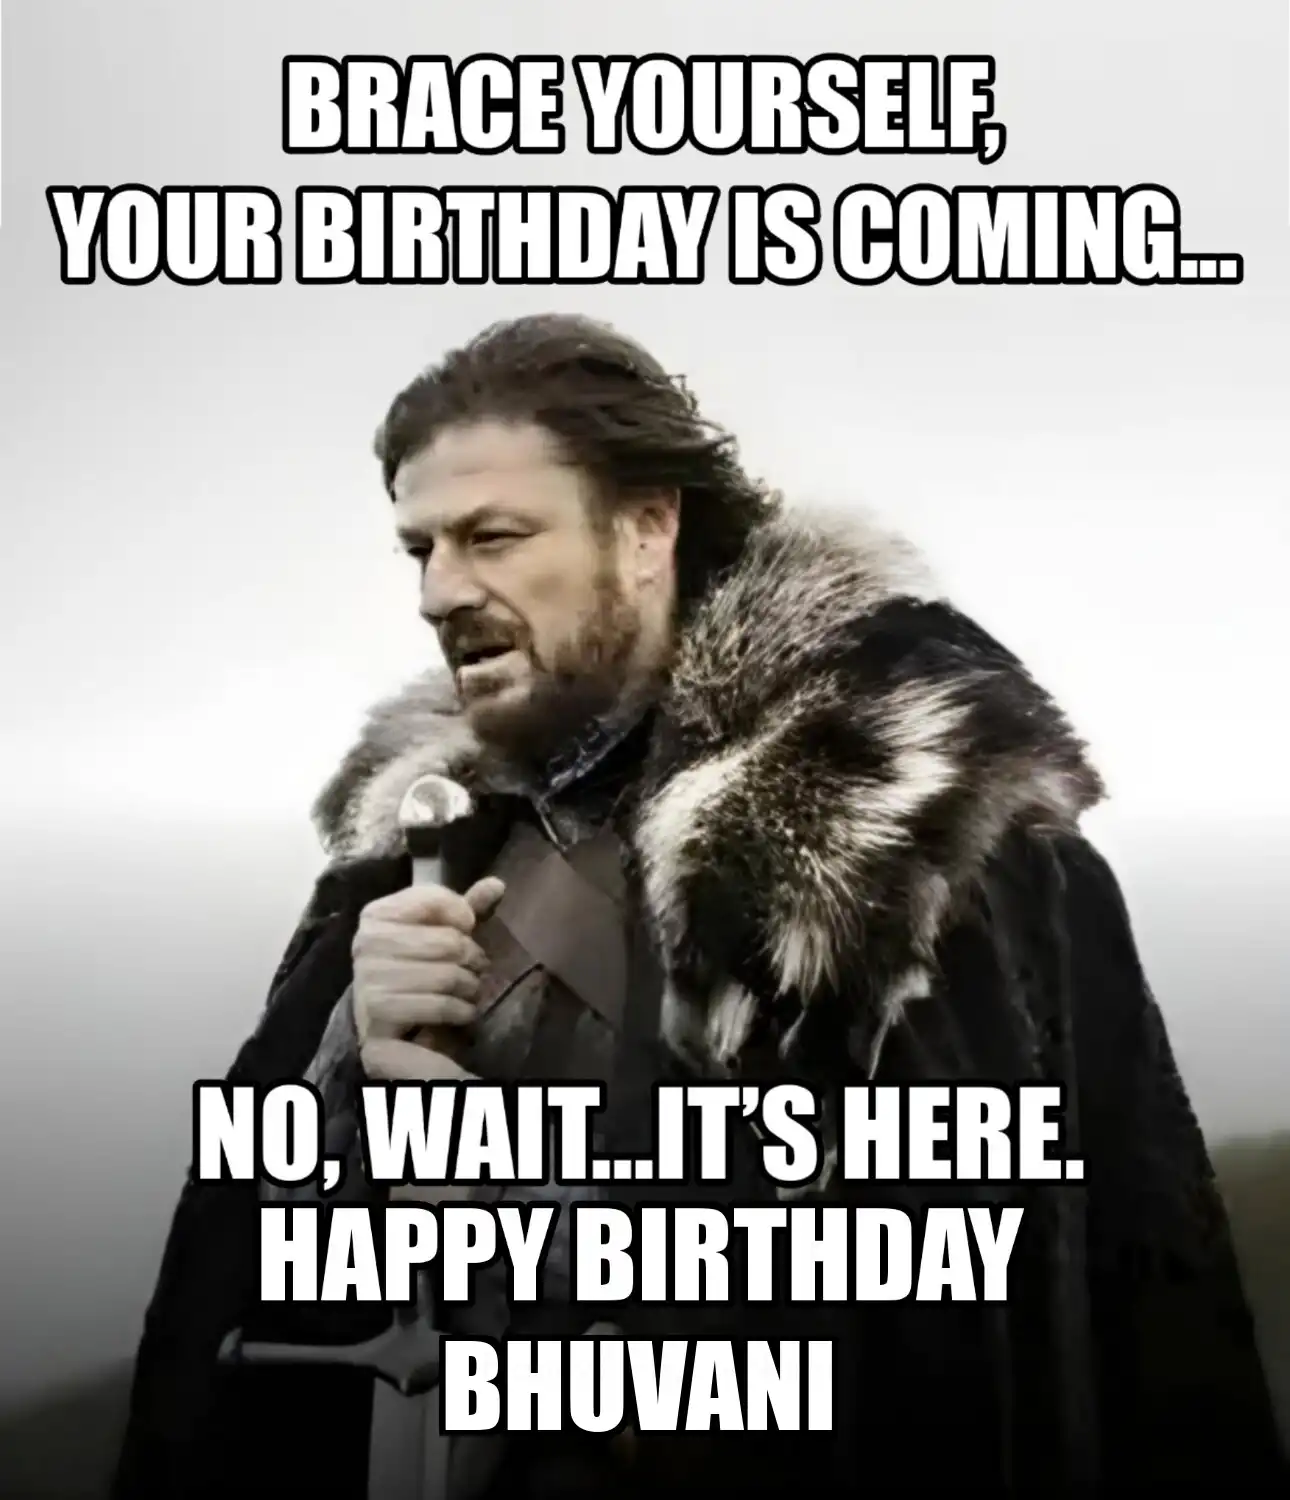 Happy Birthday Bhuvani Brace Yourself Your Birthday Is Coming Meme